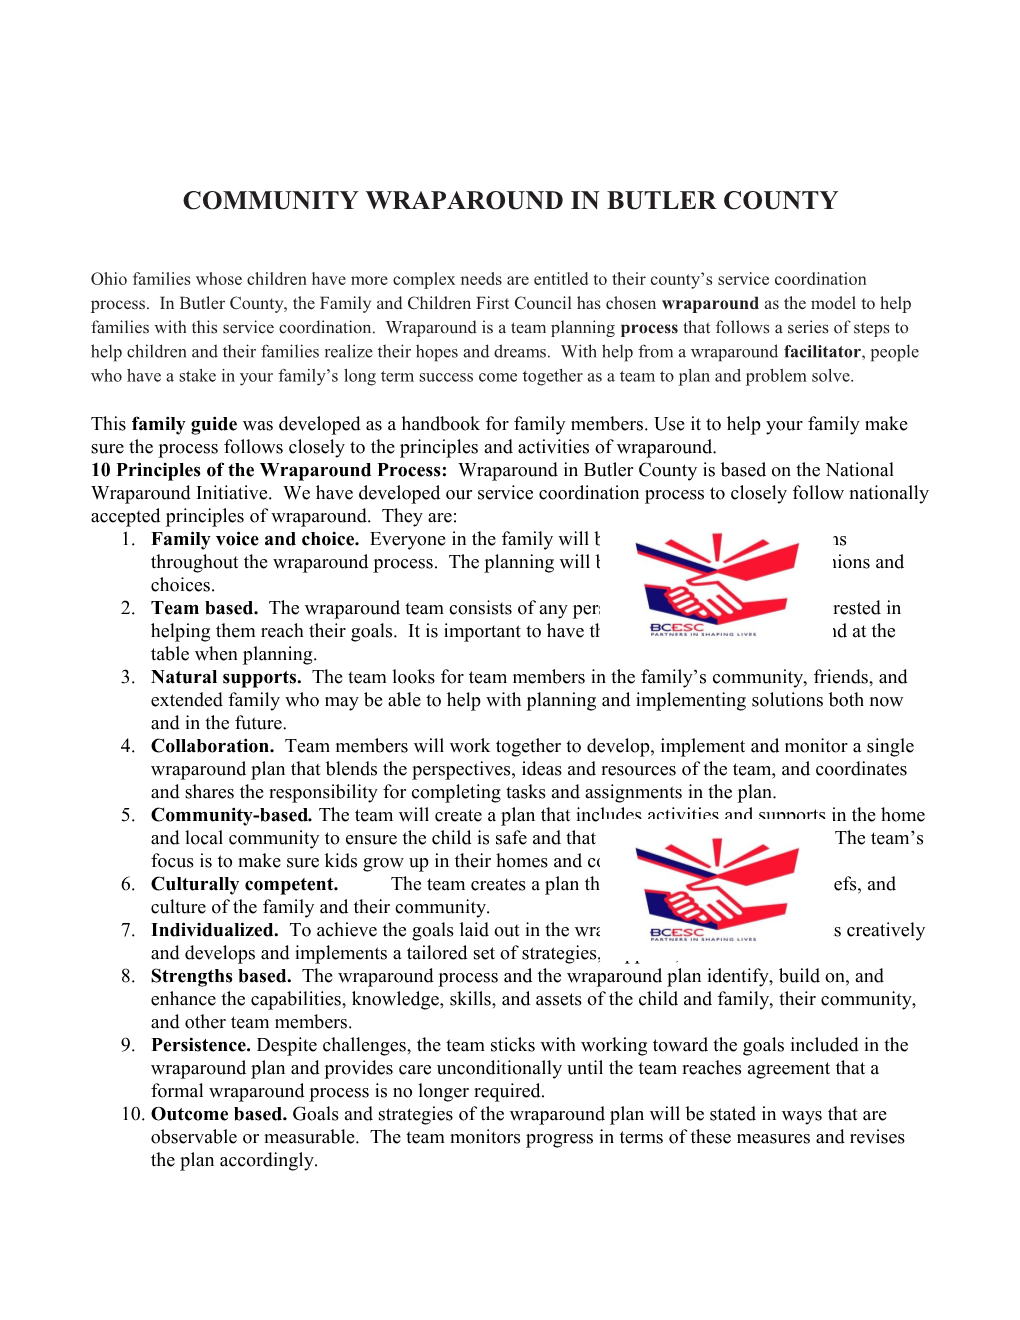 Community Wraparound in Butler County